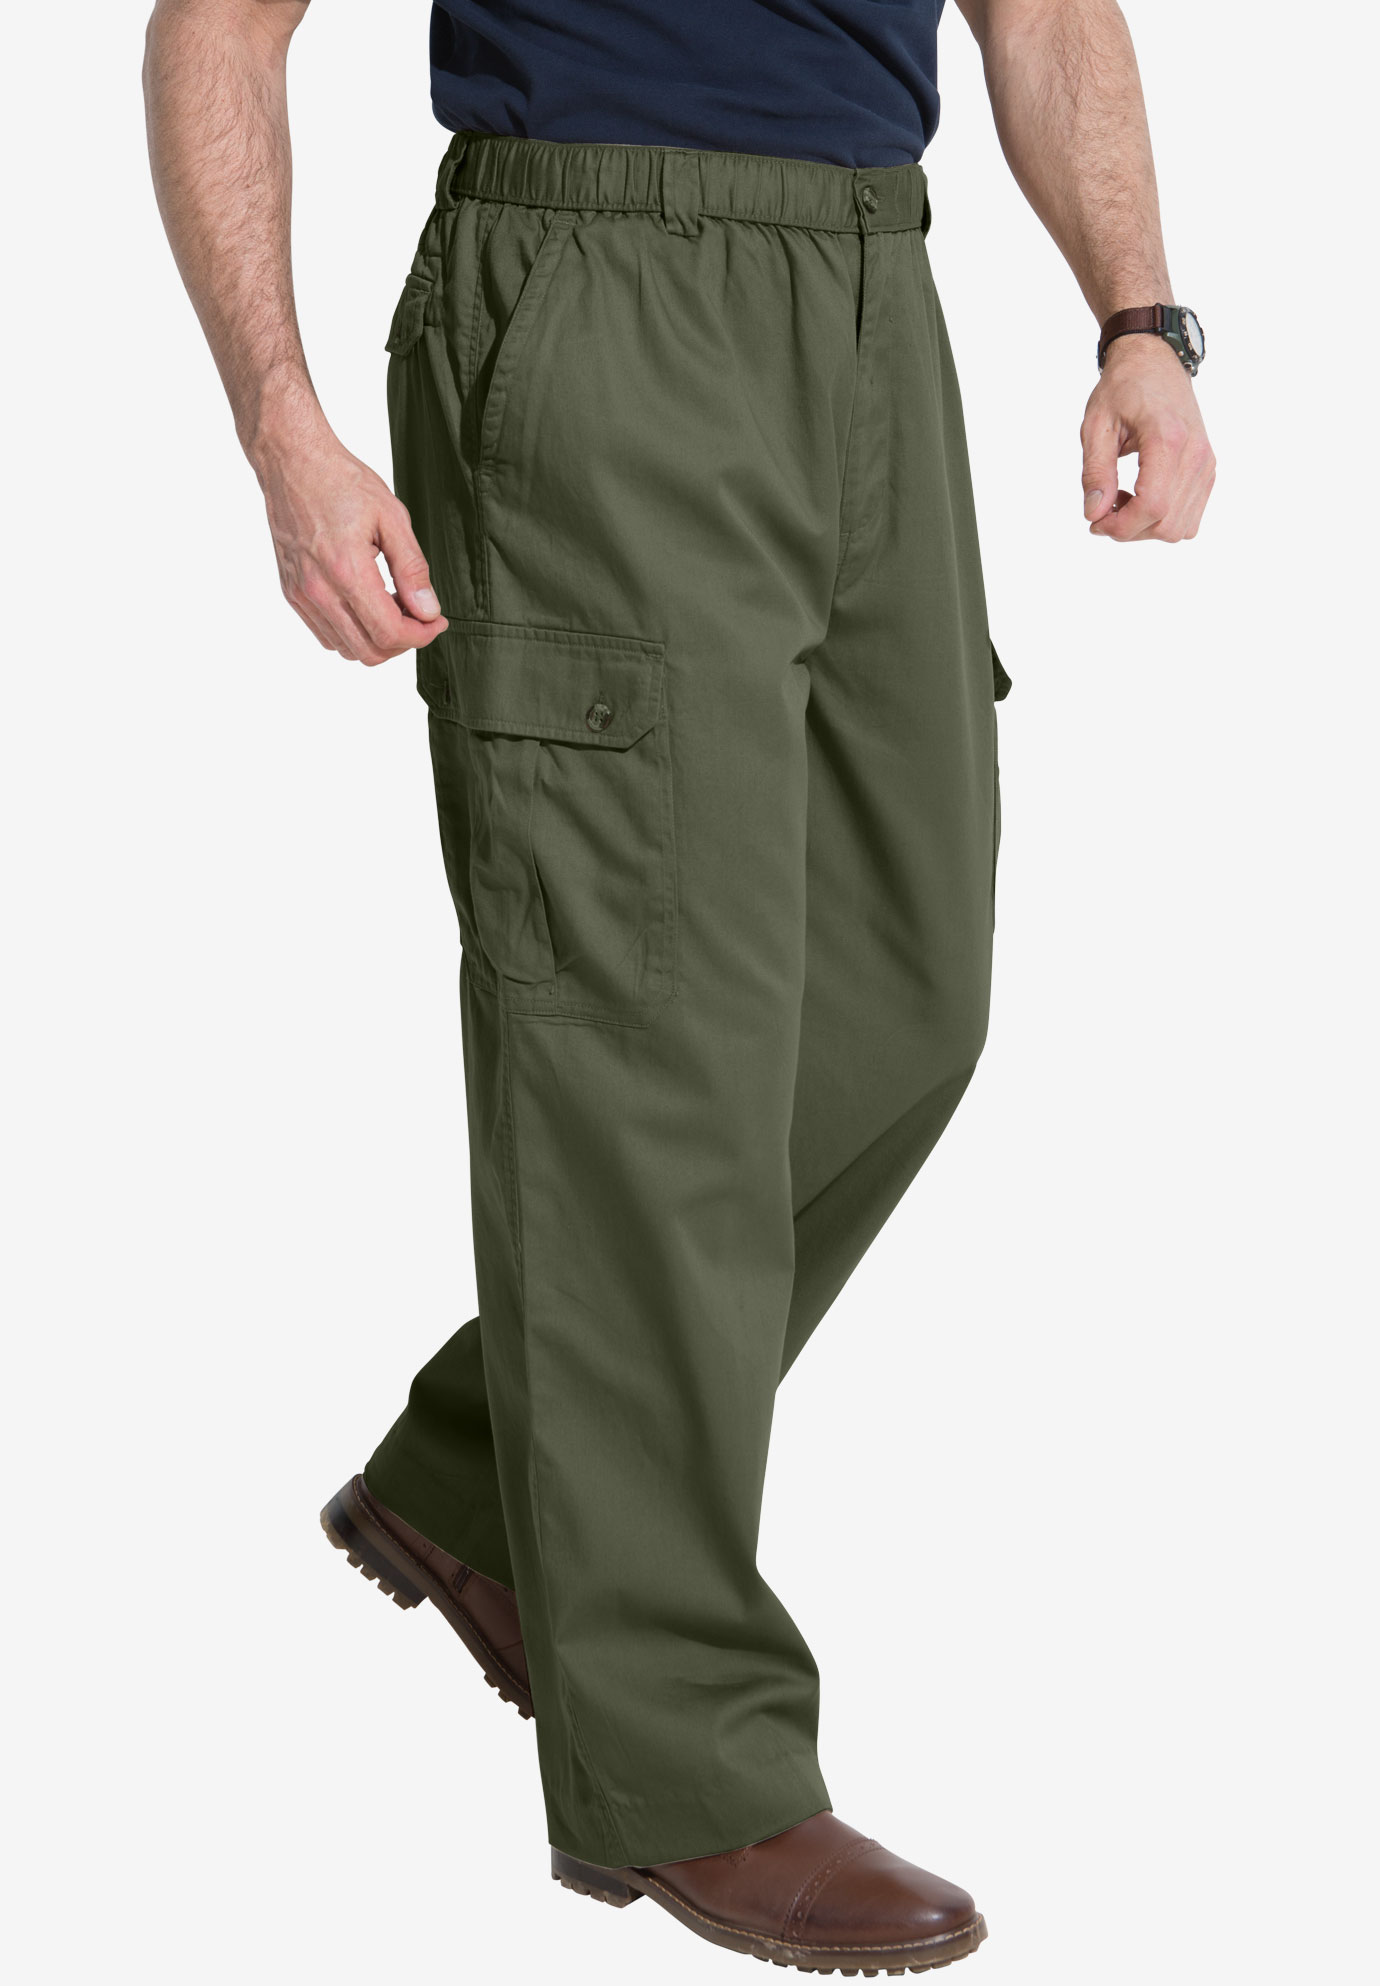 IDEALSANXUN Cargo Pants for Mens Casual Elastic Waist Loose Fit Cargo ...